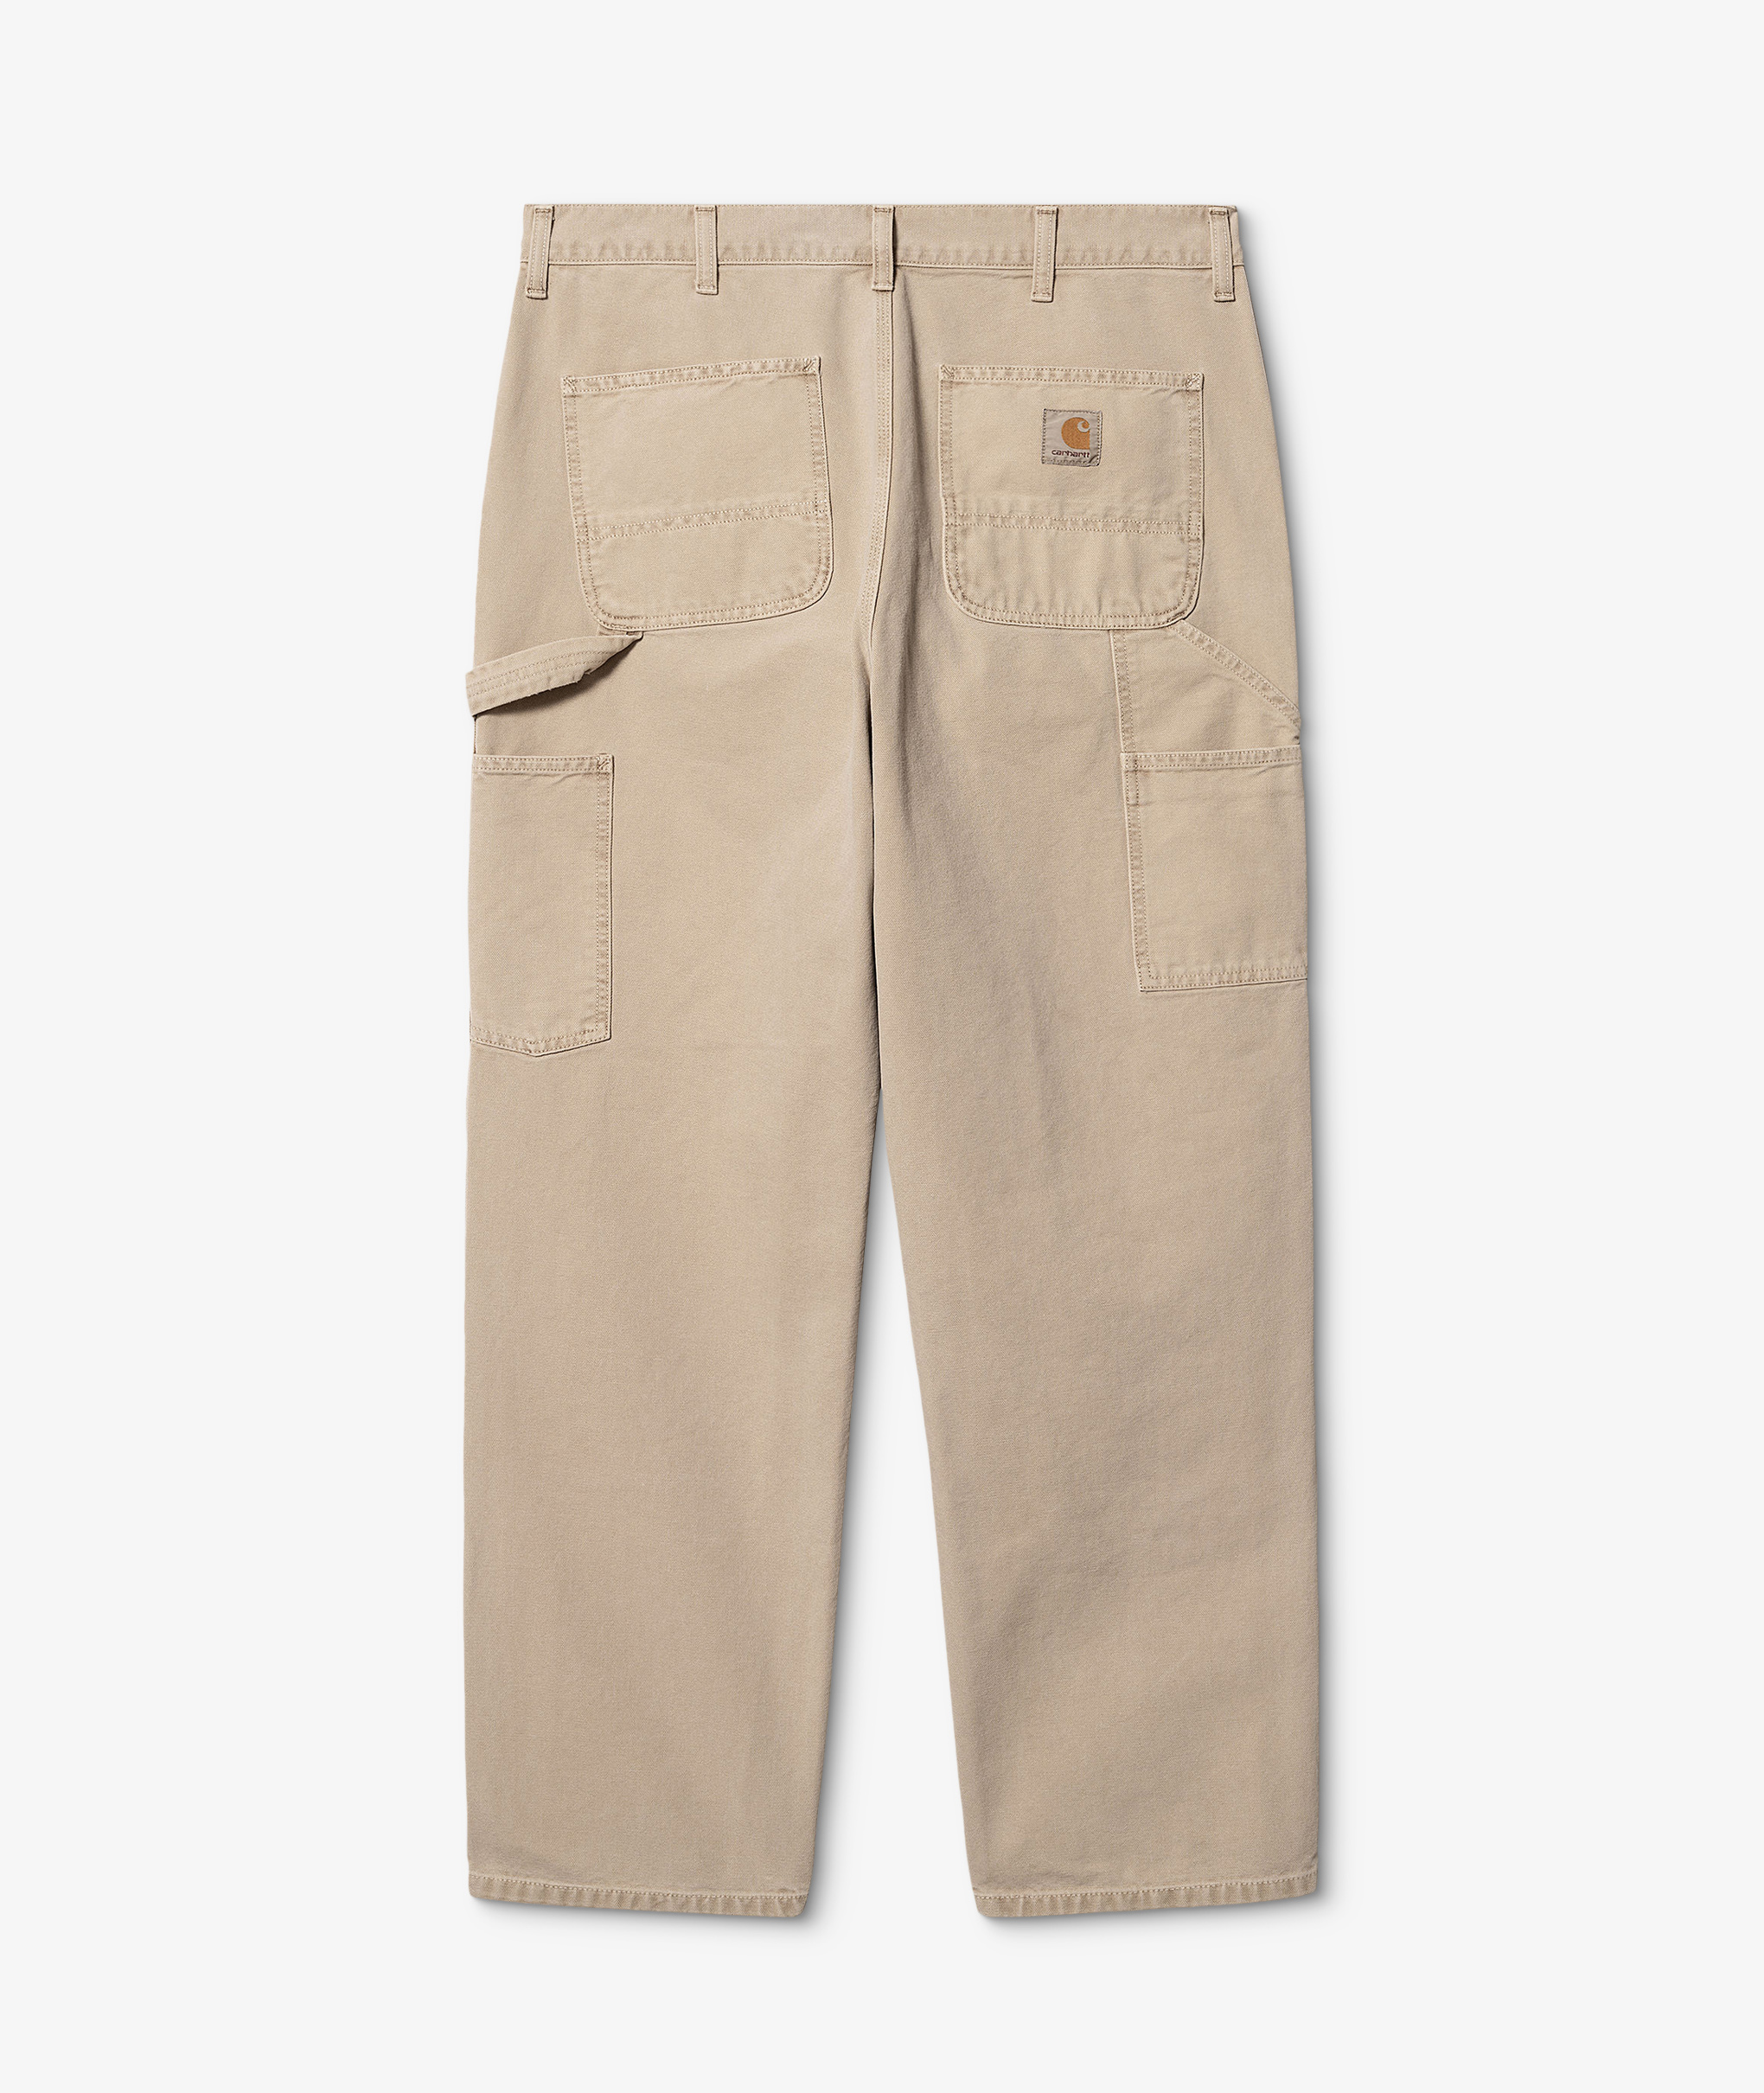 Women’s Carhartt Brown Work Wear Thick Double Knee Cargo Pants - Size 18 x  32